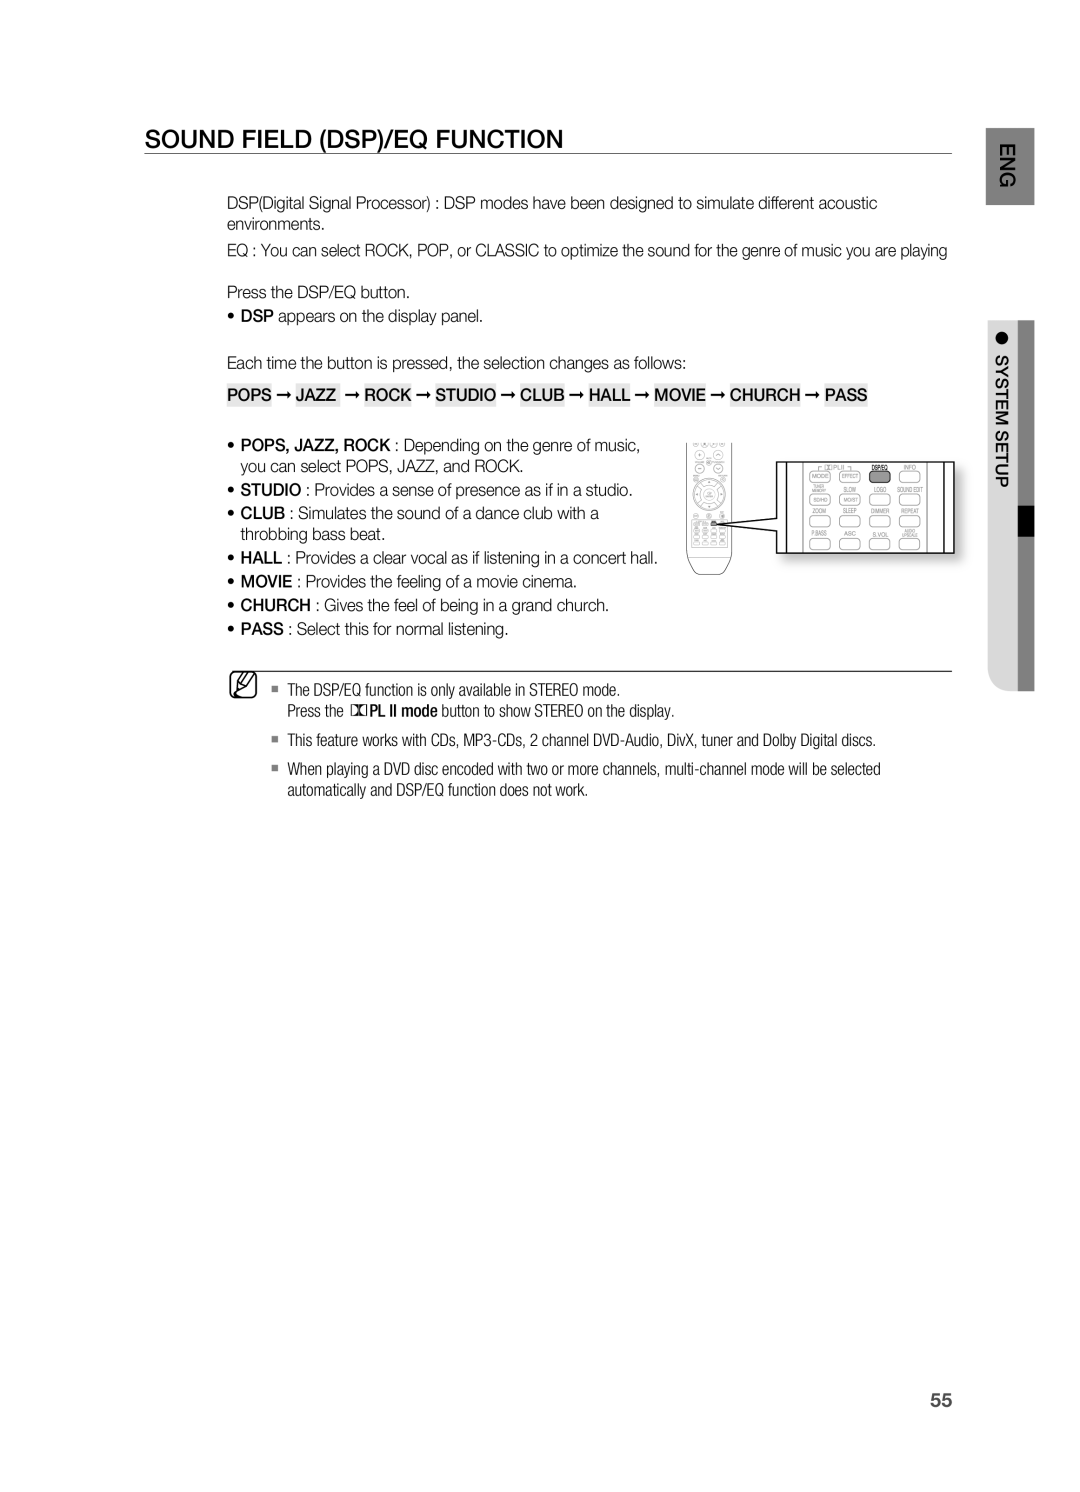 Samsung HT-TX715 user manual Sound Field Dsp/Eq Function 